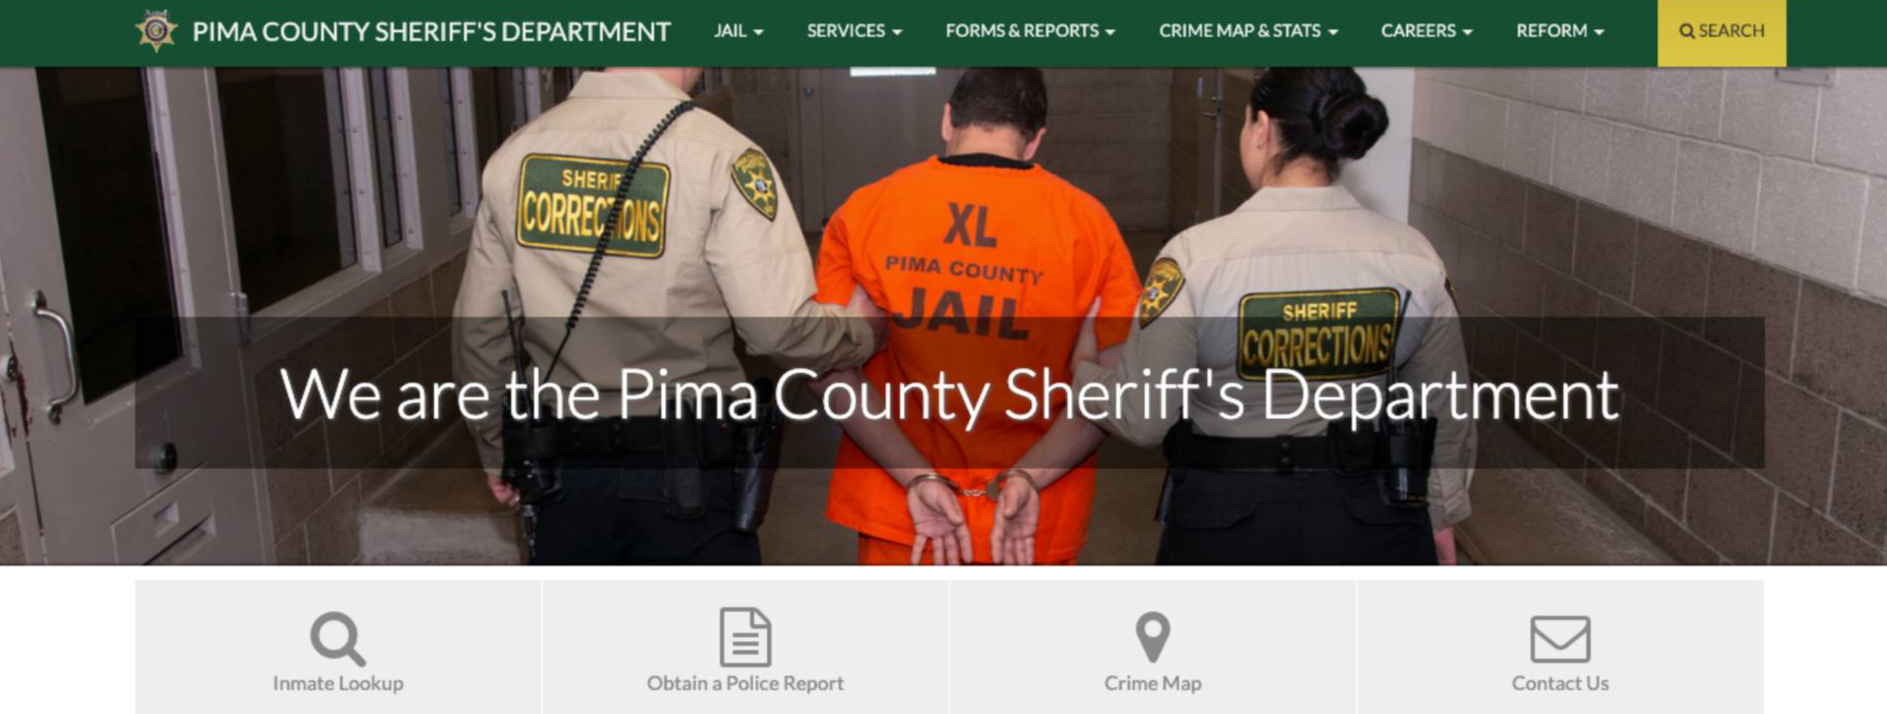 PIMA COUNTY SHERIFF'S DEPARTMENT  1920 x 1080.jpg